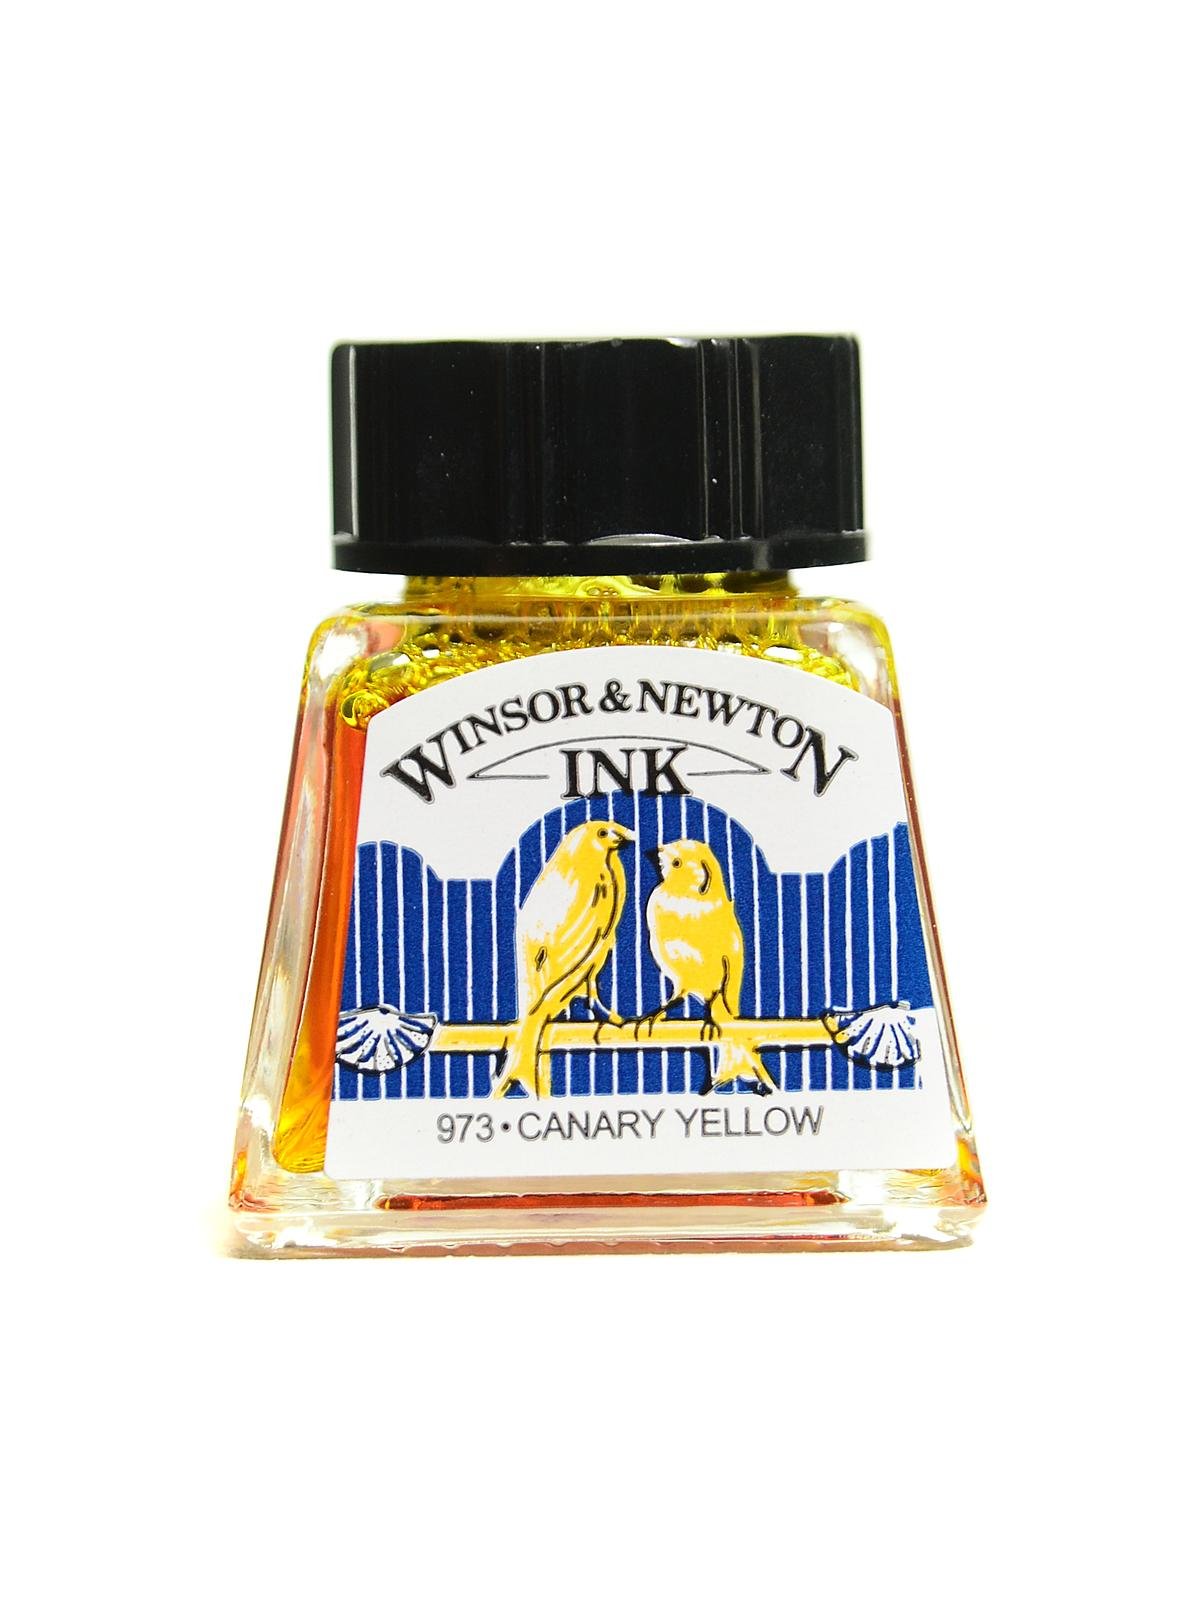 Winsor & Newton Drawing Ink, 14ml Bottle, Black Indian